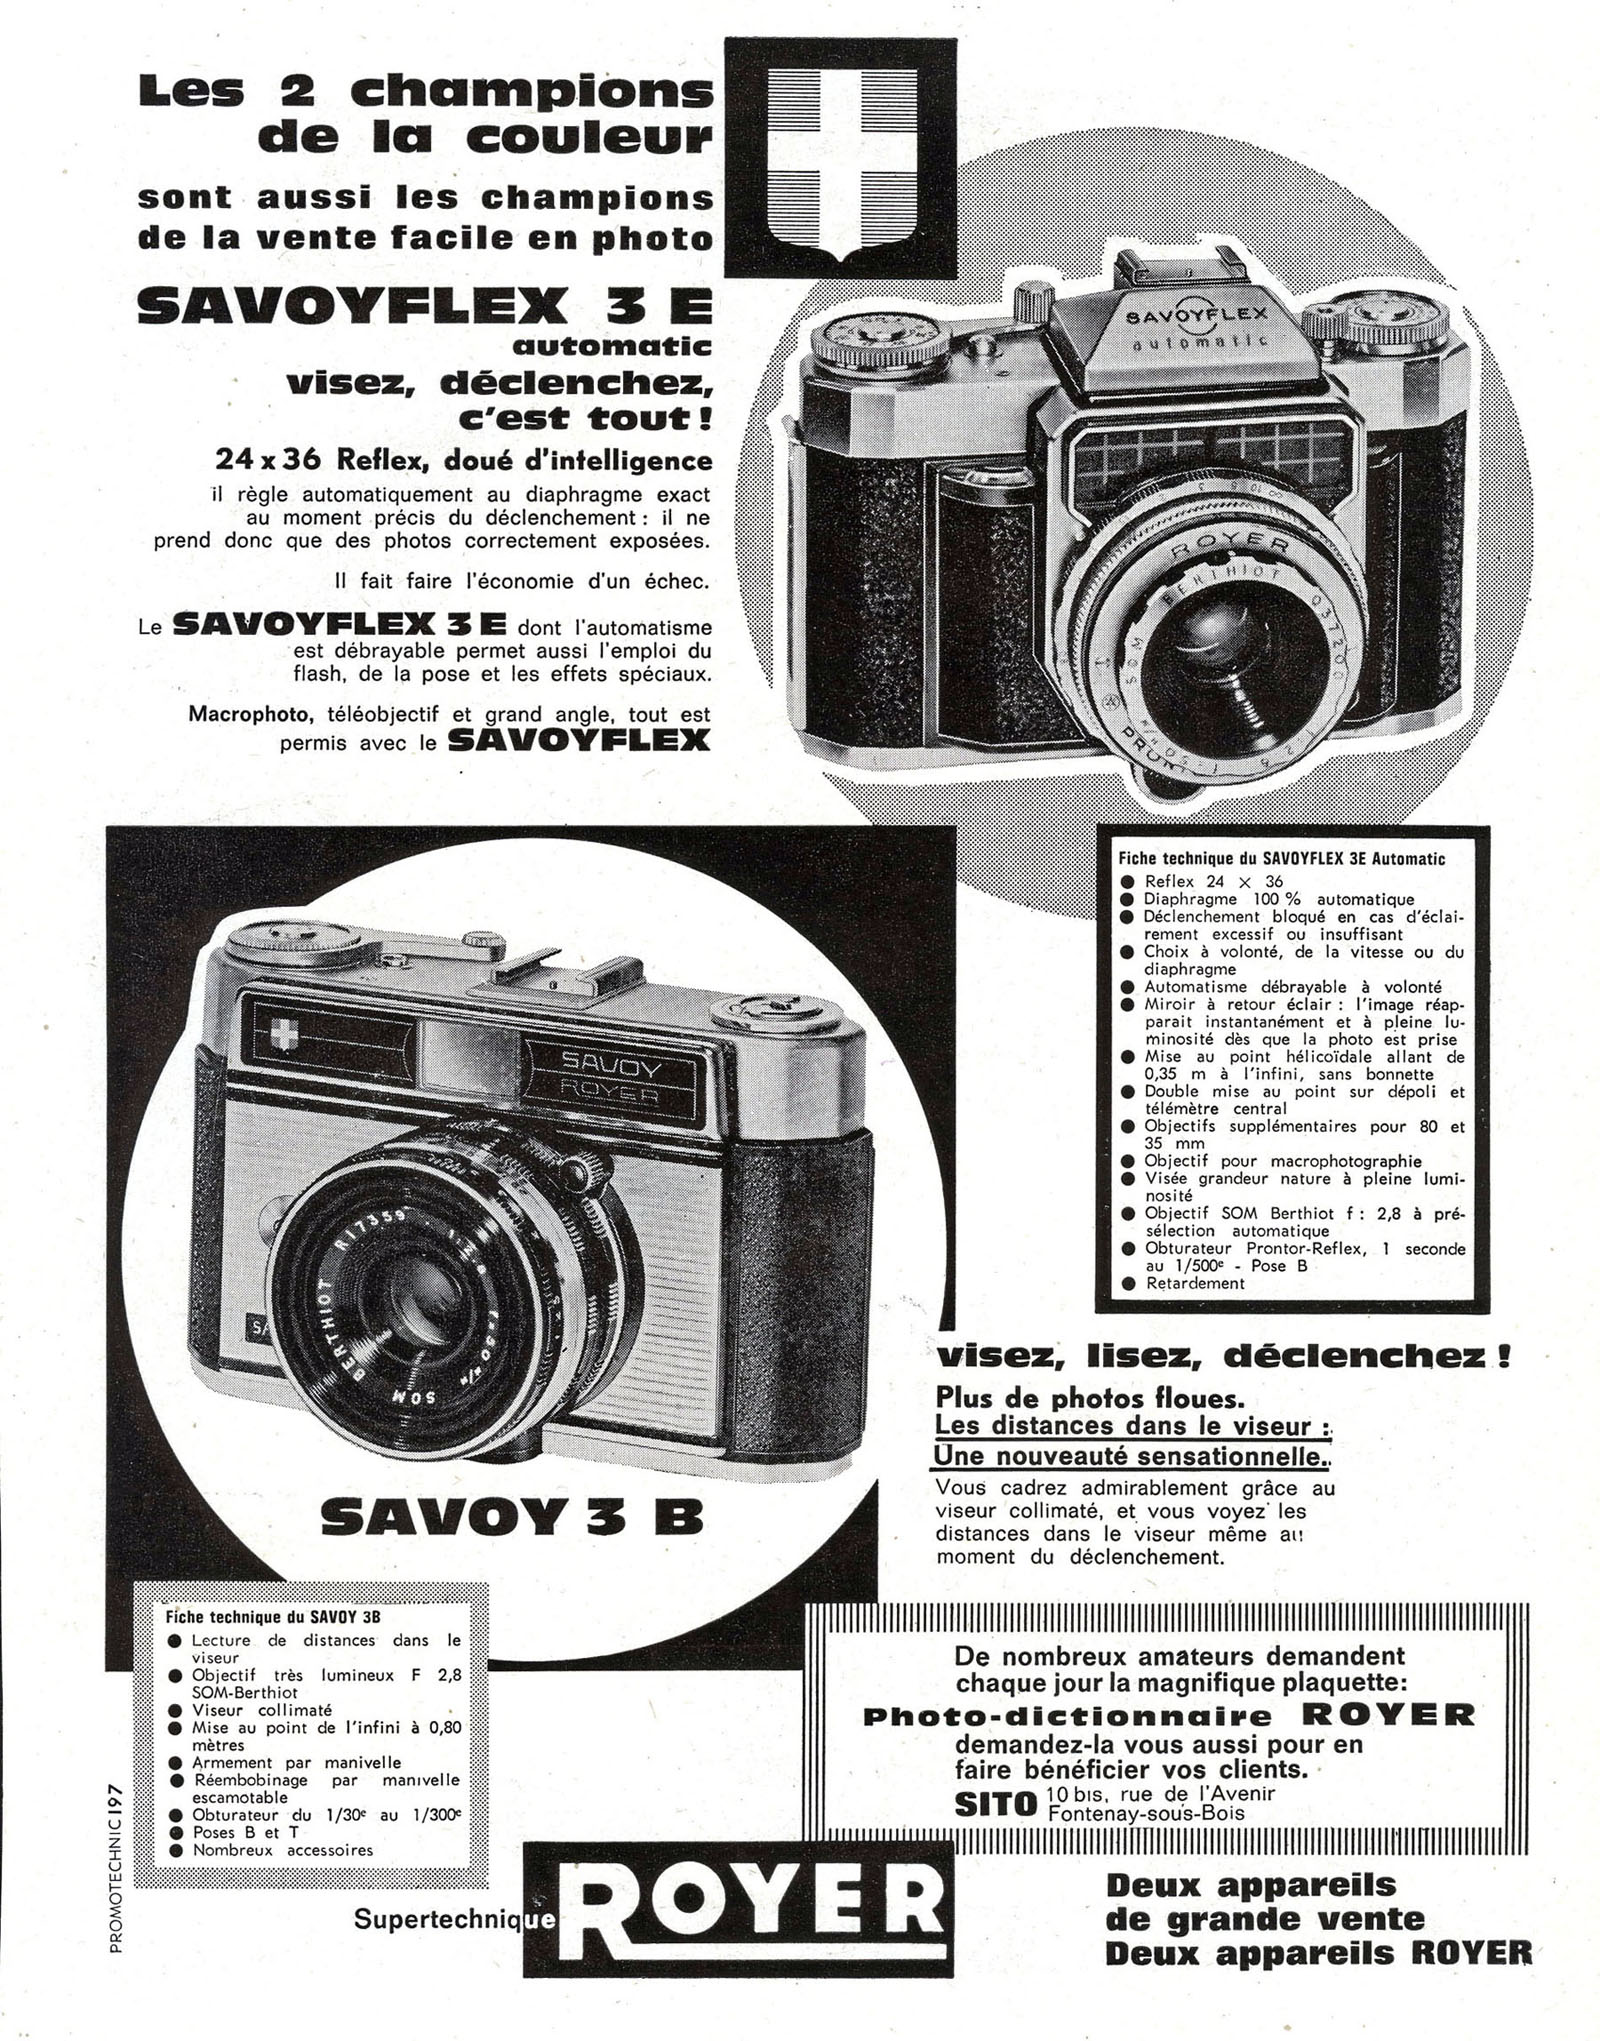 Wallpaper 1414-3  SITO ROYER  Savoyflex 3E automatic, collection AMI Appareils photos